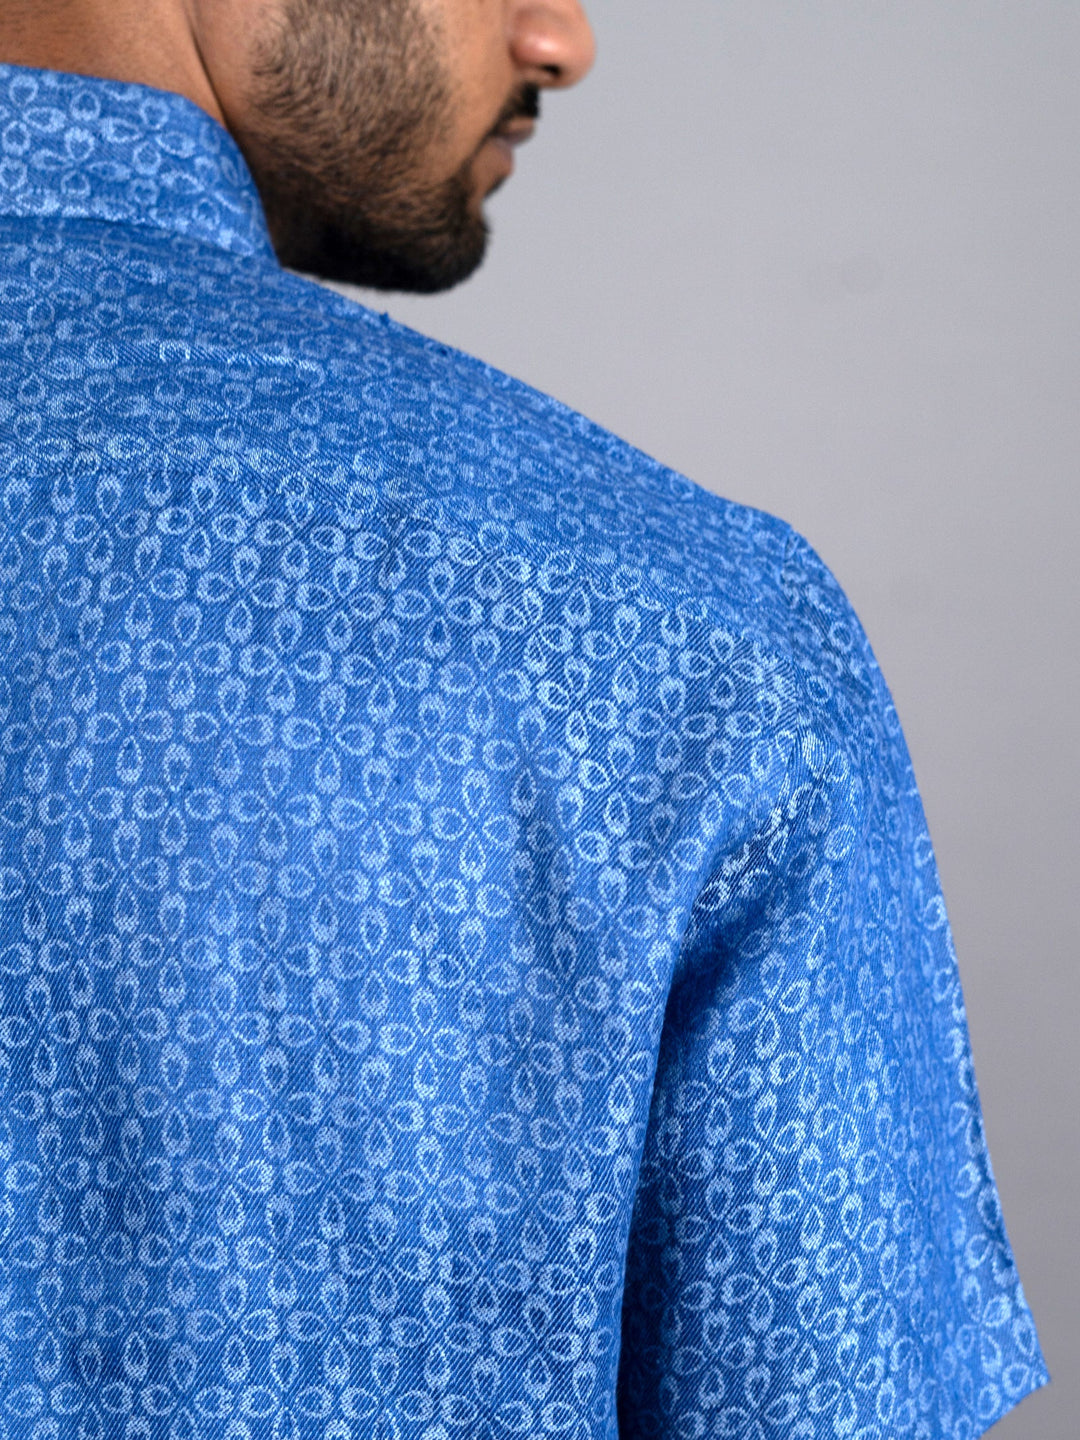 Dash - Pure Linen Jacquard Half Sleeve Shirt - Blue | Rescue